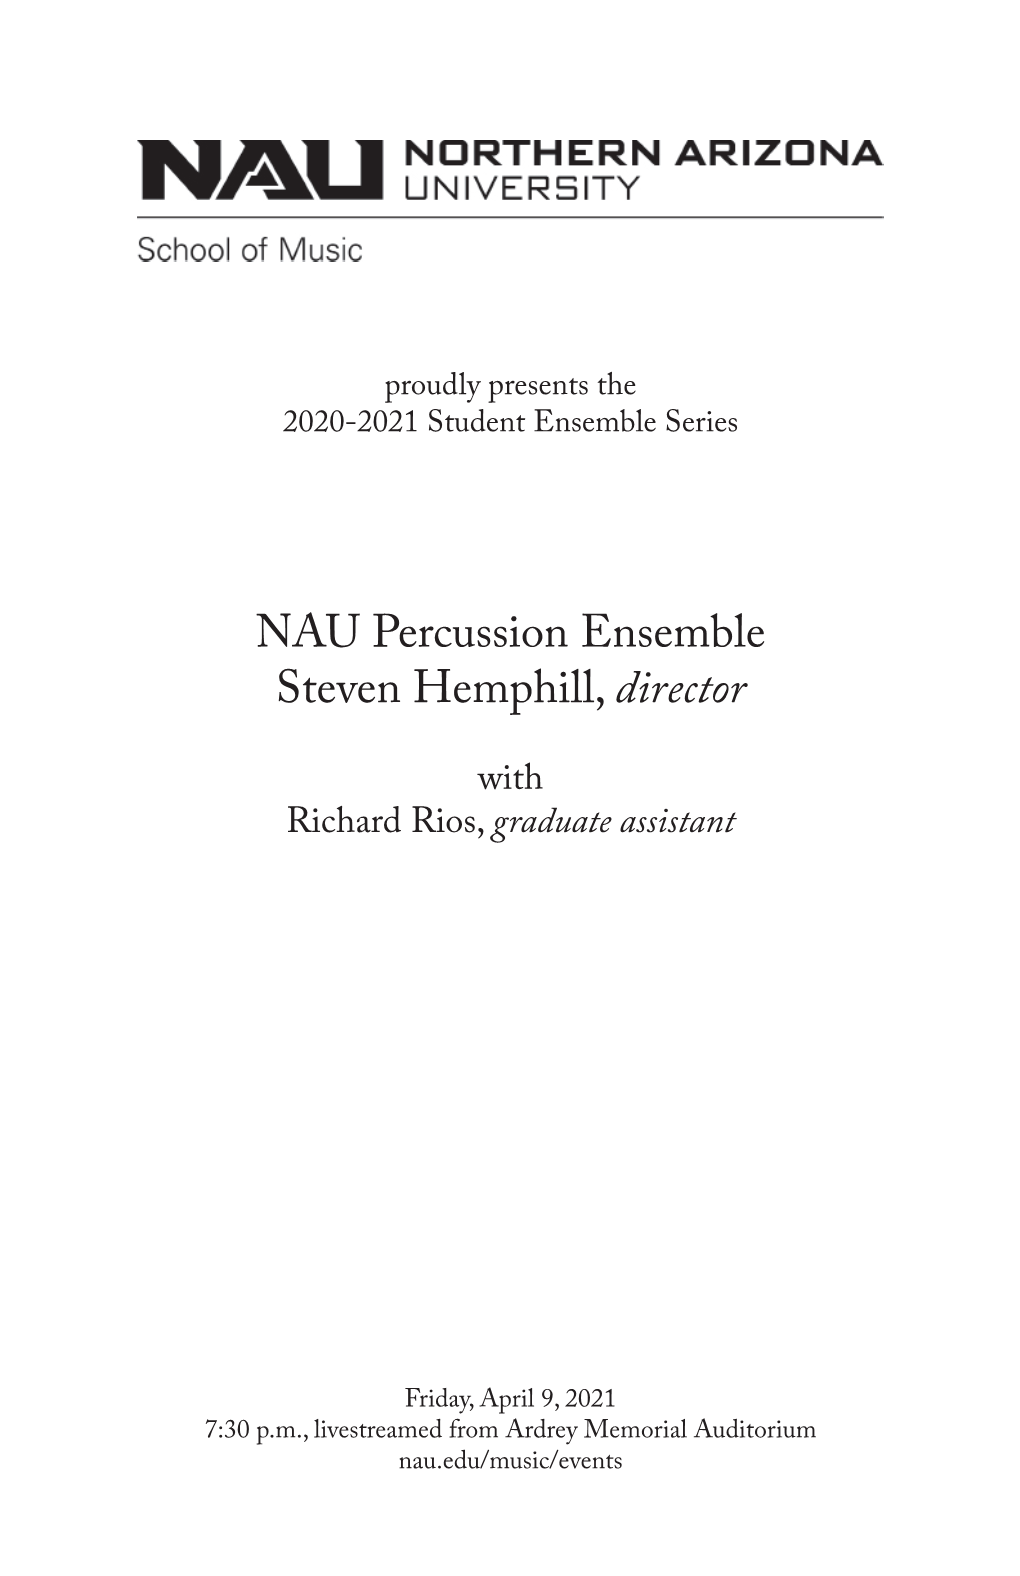 NAU Percussion Ensemble Steven Hemphill, Director